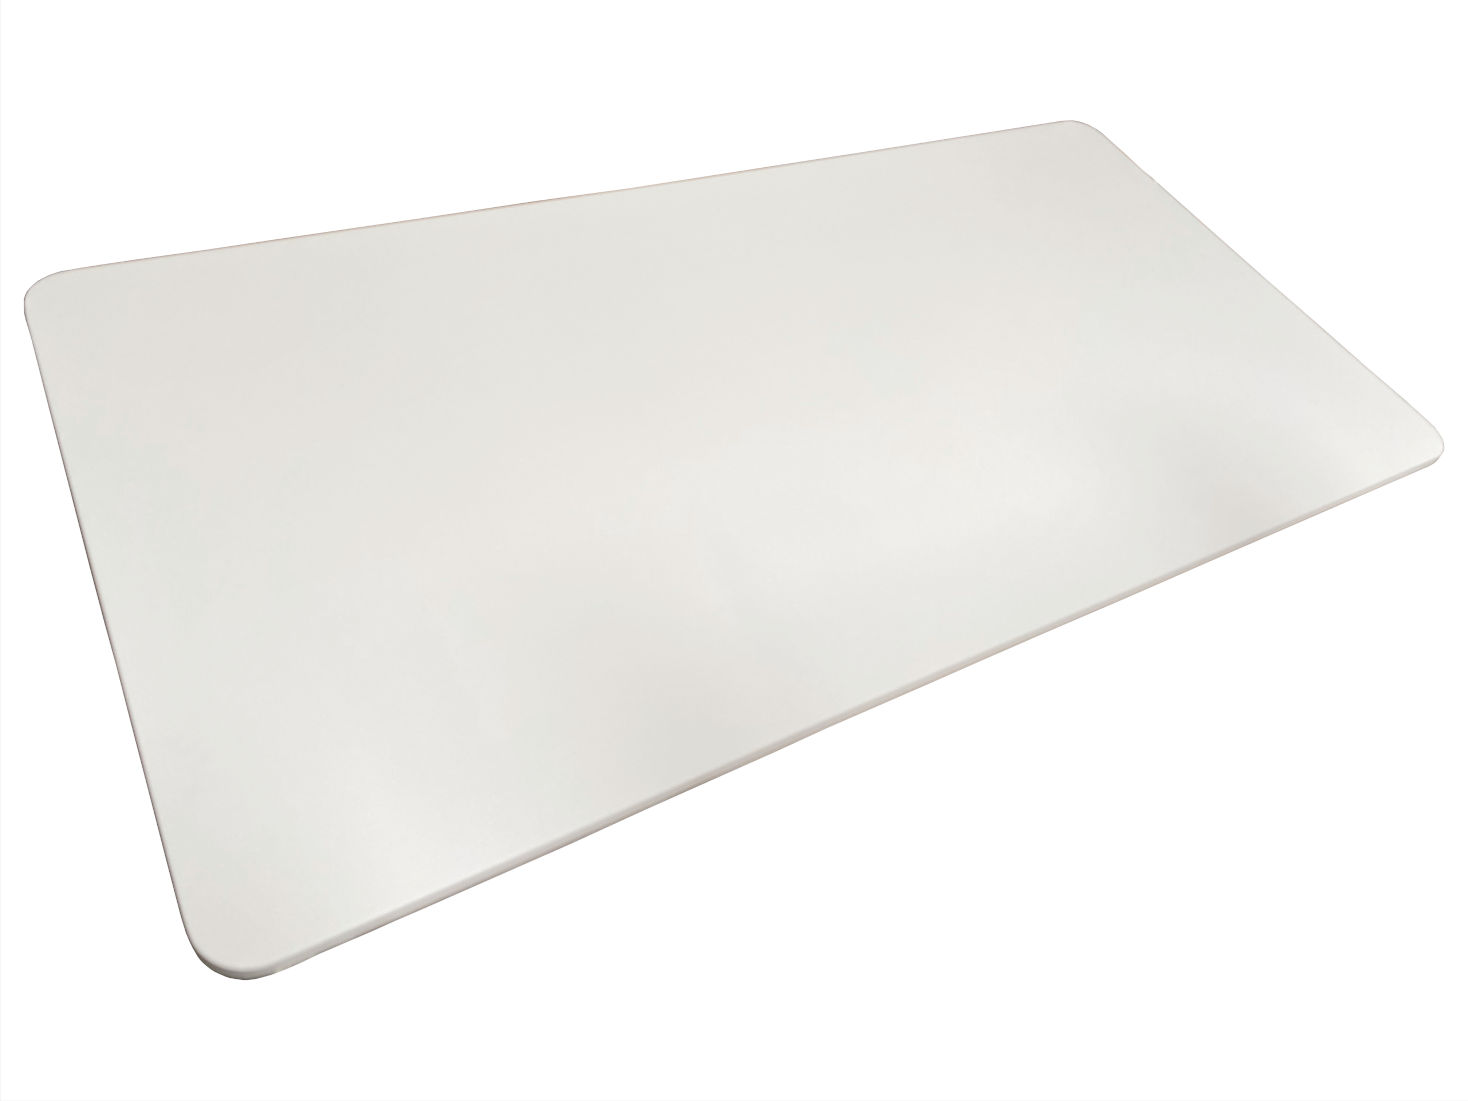 Tischplatten Verbundholz 1600 mm 800 mm 17 mm stark weiß (1 Stück)